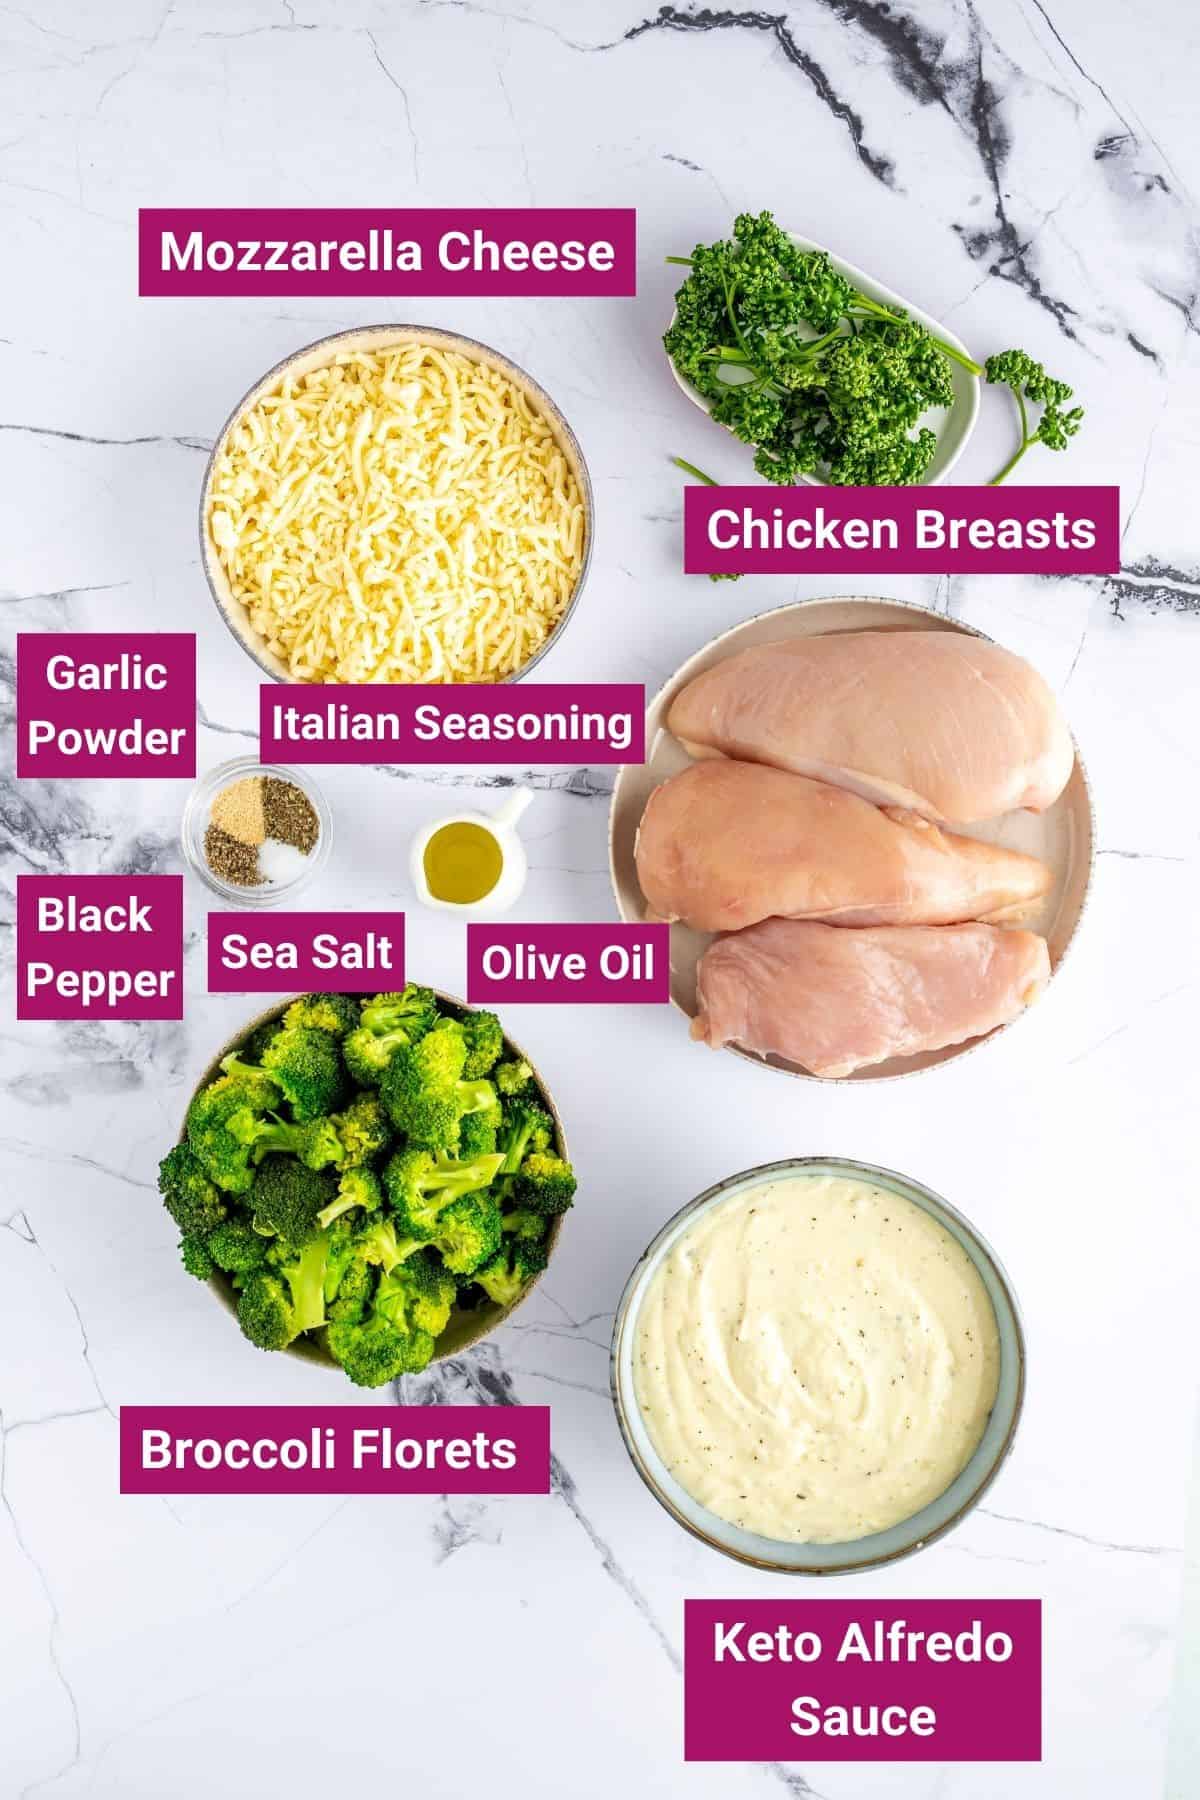 mozzarella cheese, fresh parsley, chicken breasts, garlic powder, black pepper, sea salt, olive oil, broccoli and alredo sauce on separate bowls